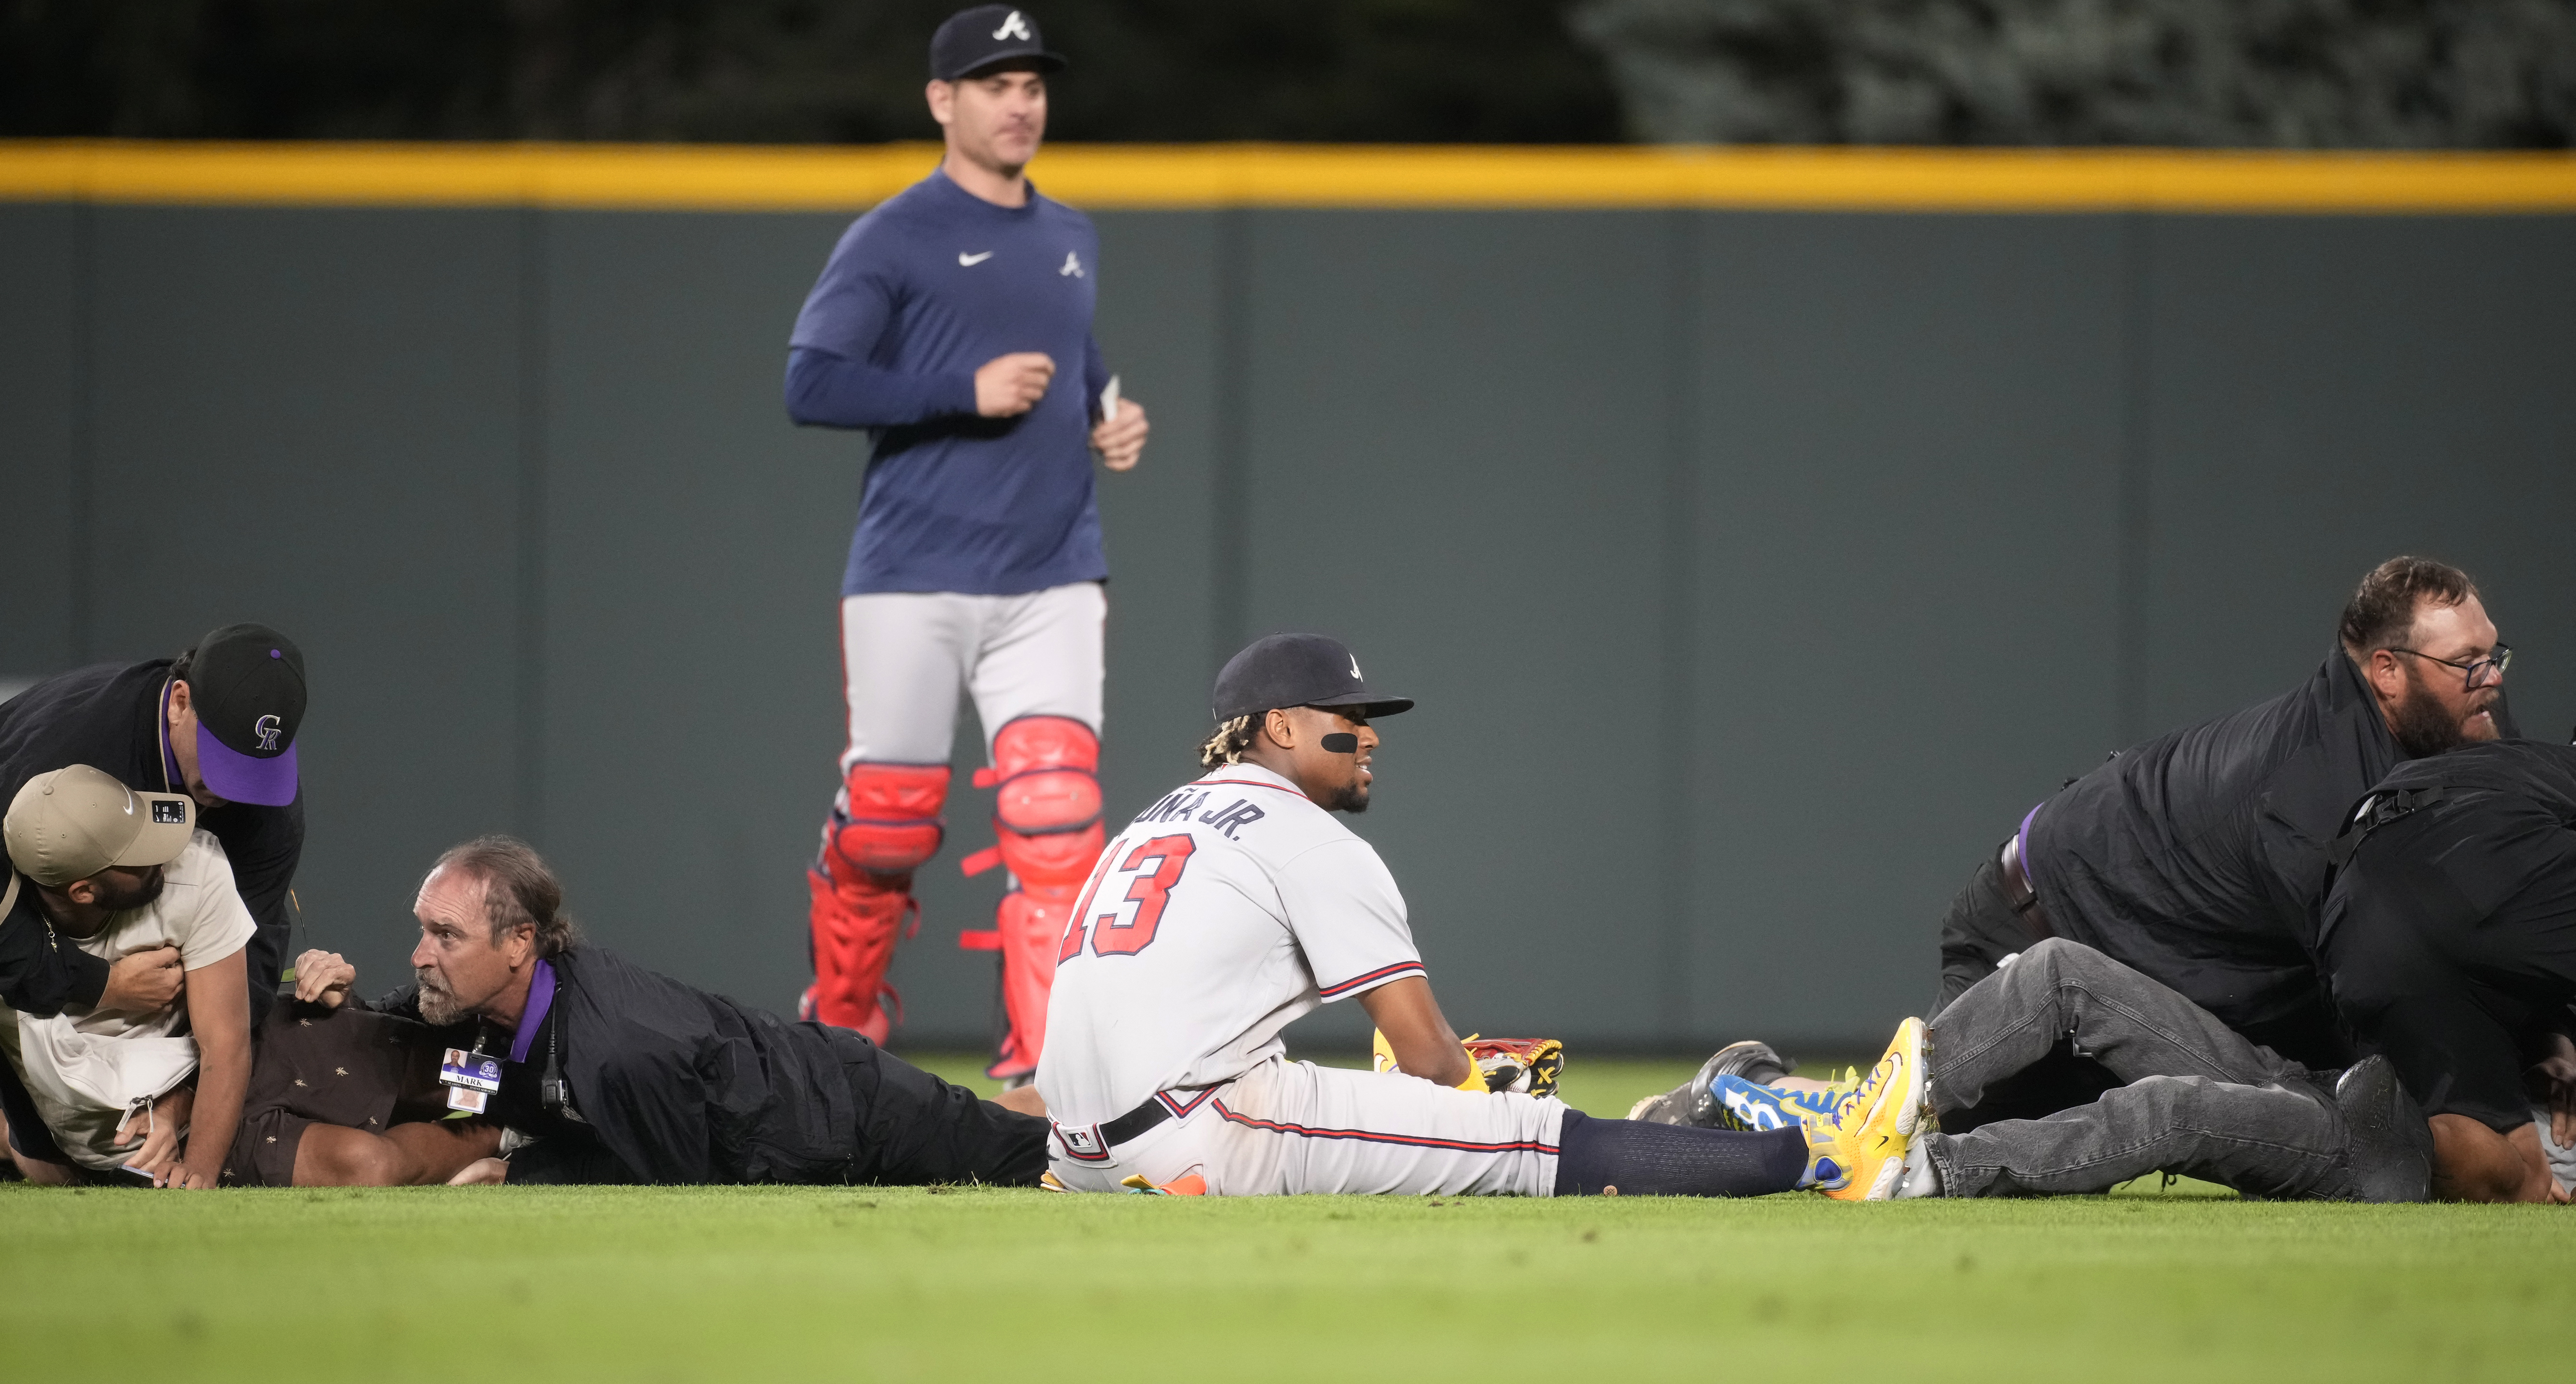 Braves score twice on Suzuki's fielding error, overcome 6-run deficit to  beat Cubs